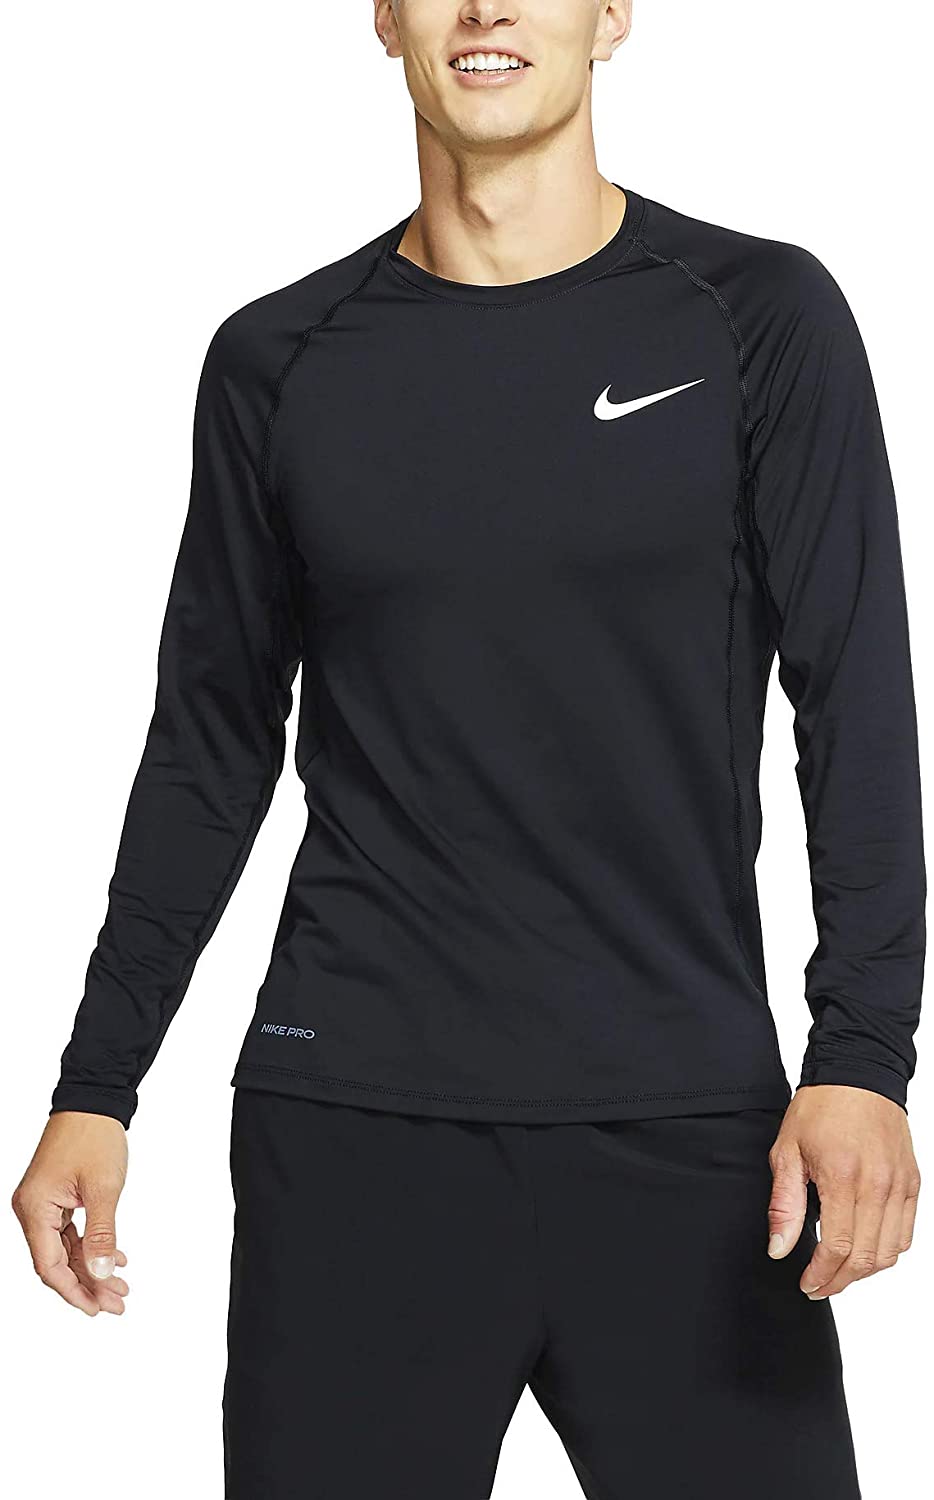 Rafflesia Arnoldi sábado Inocente Nike Men's Pro Slim Fit Long Sleeve Shirt - Walmart.com